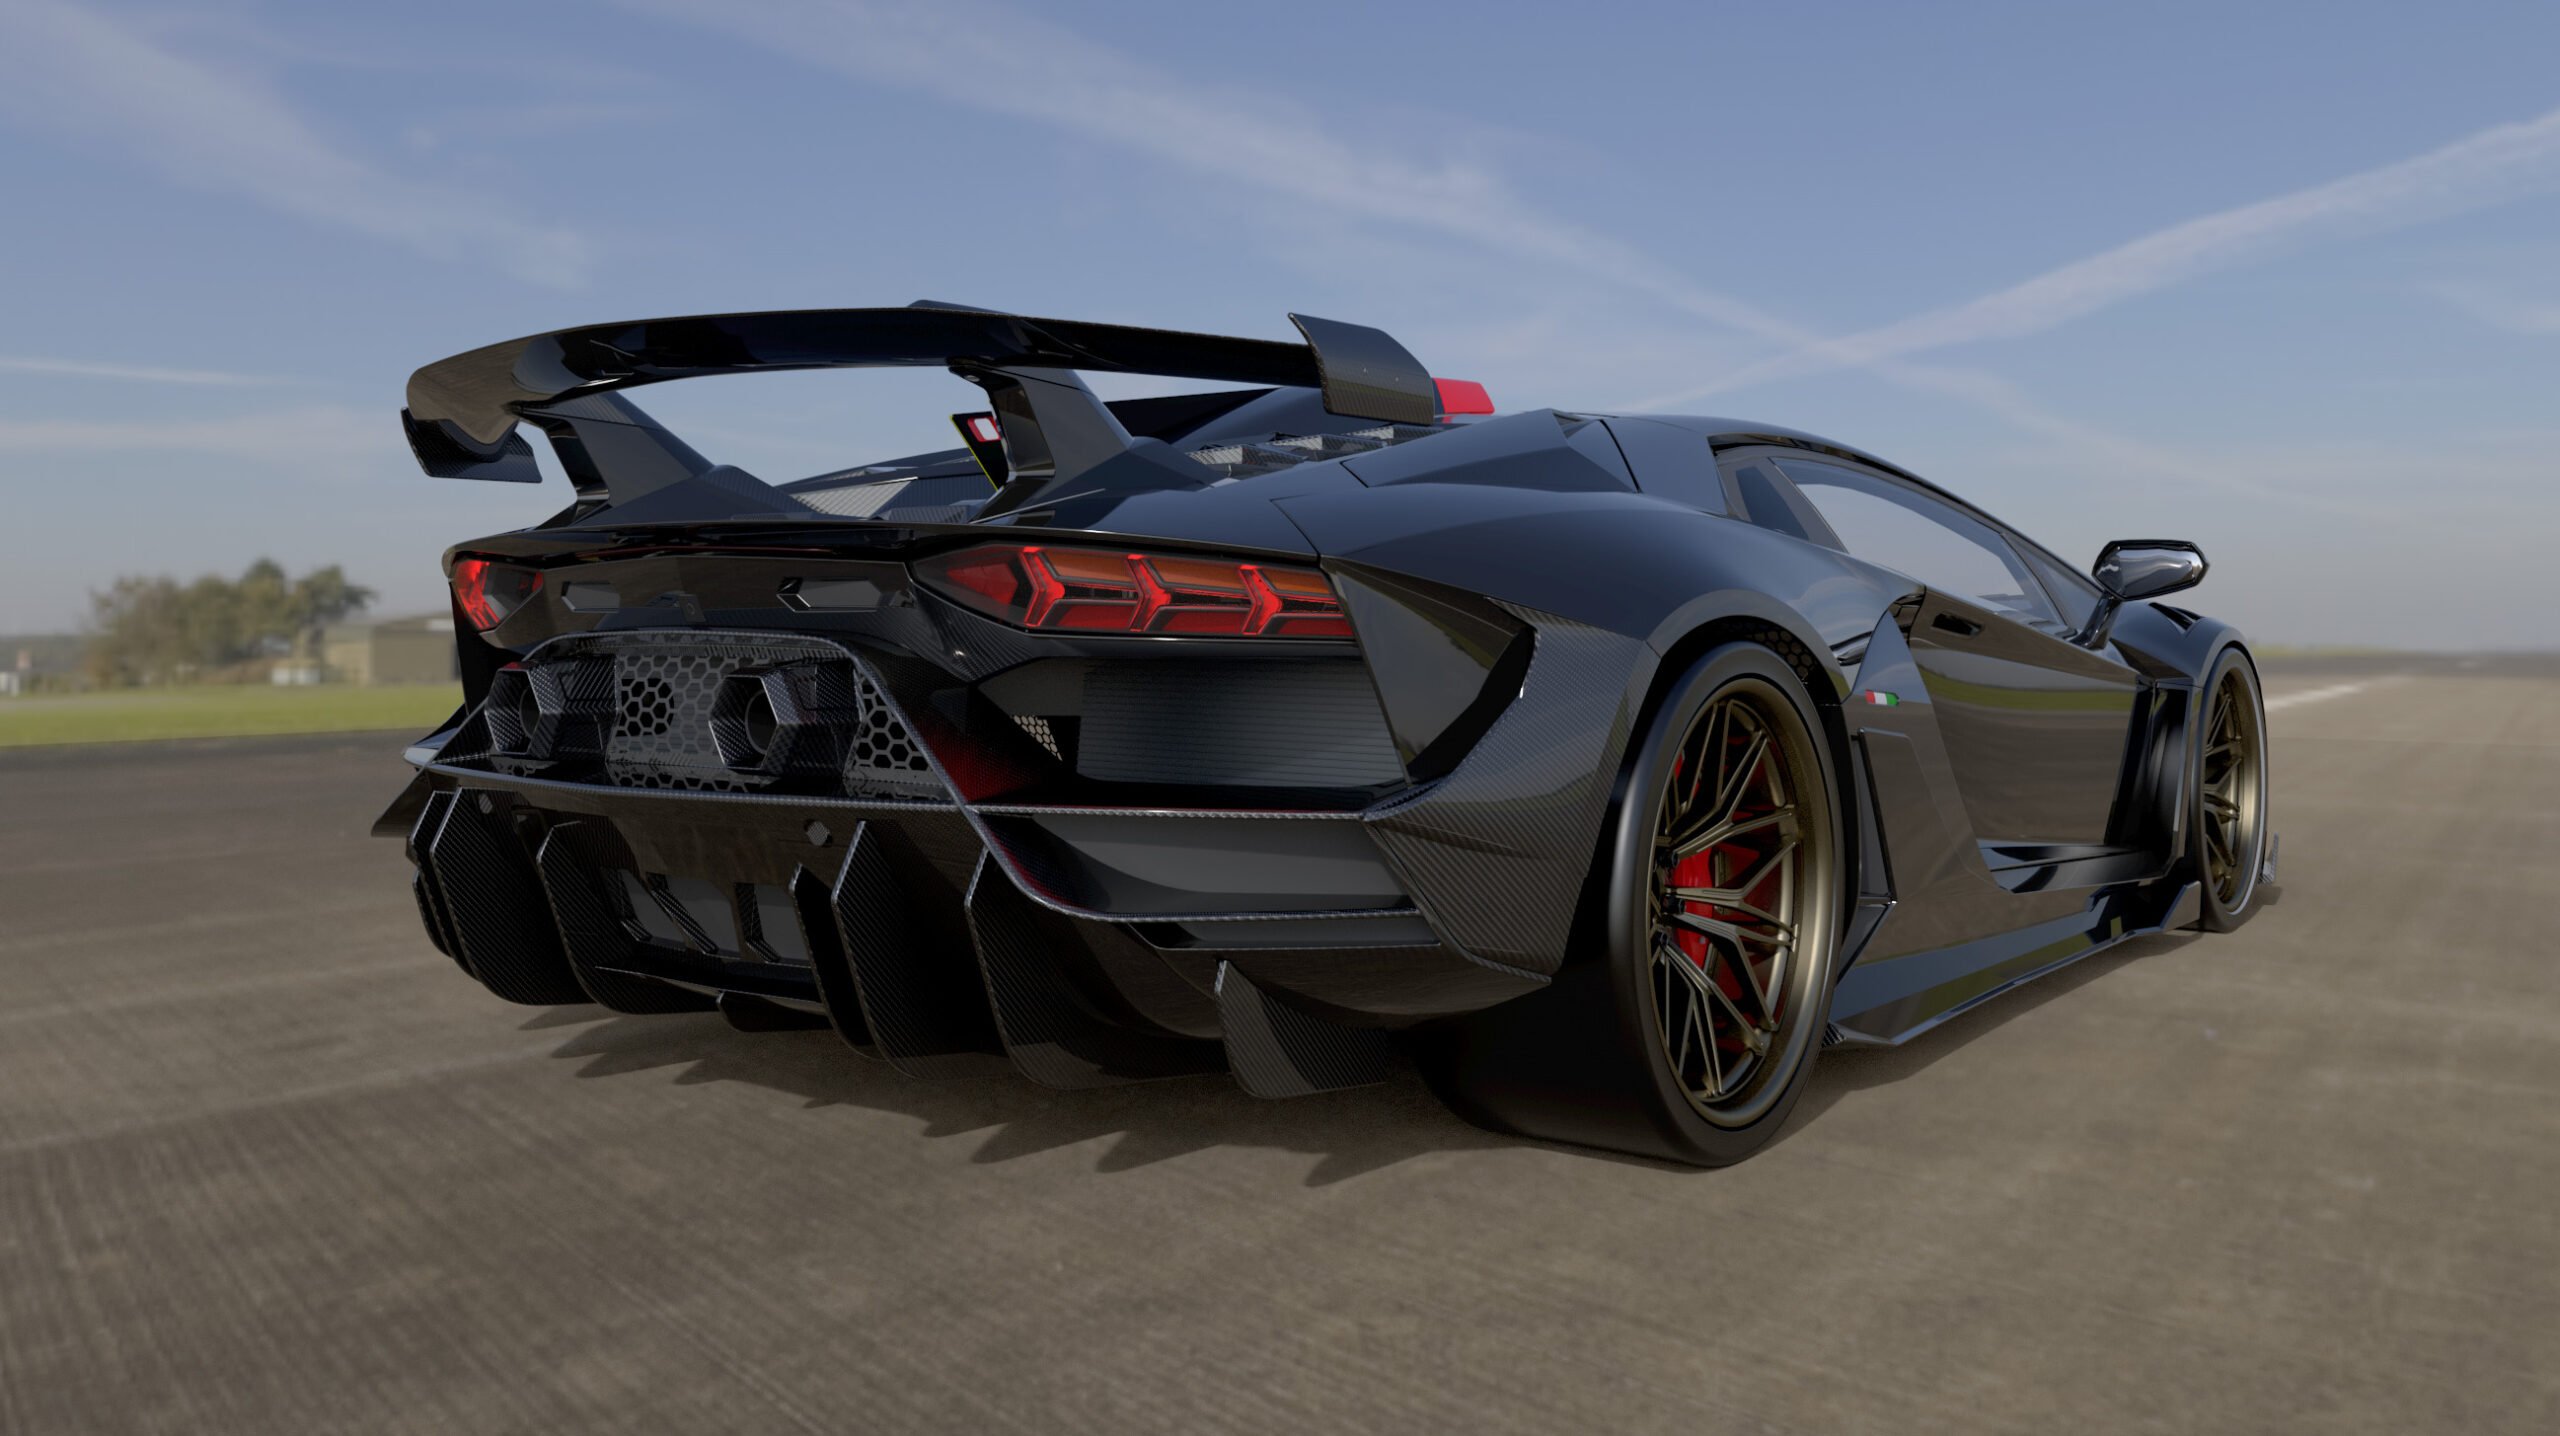 Check price and buy Duke Dynamics Body kit set for Lamborghini Aventador SV-R Widebody kit